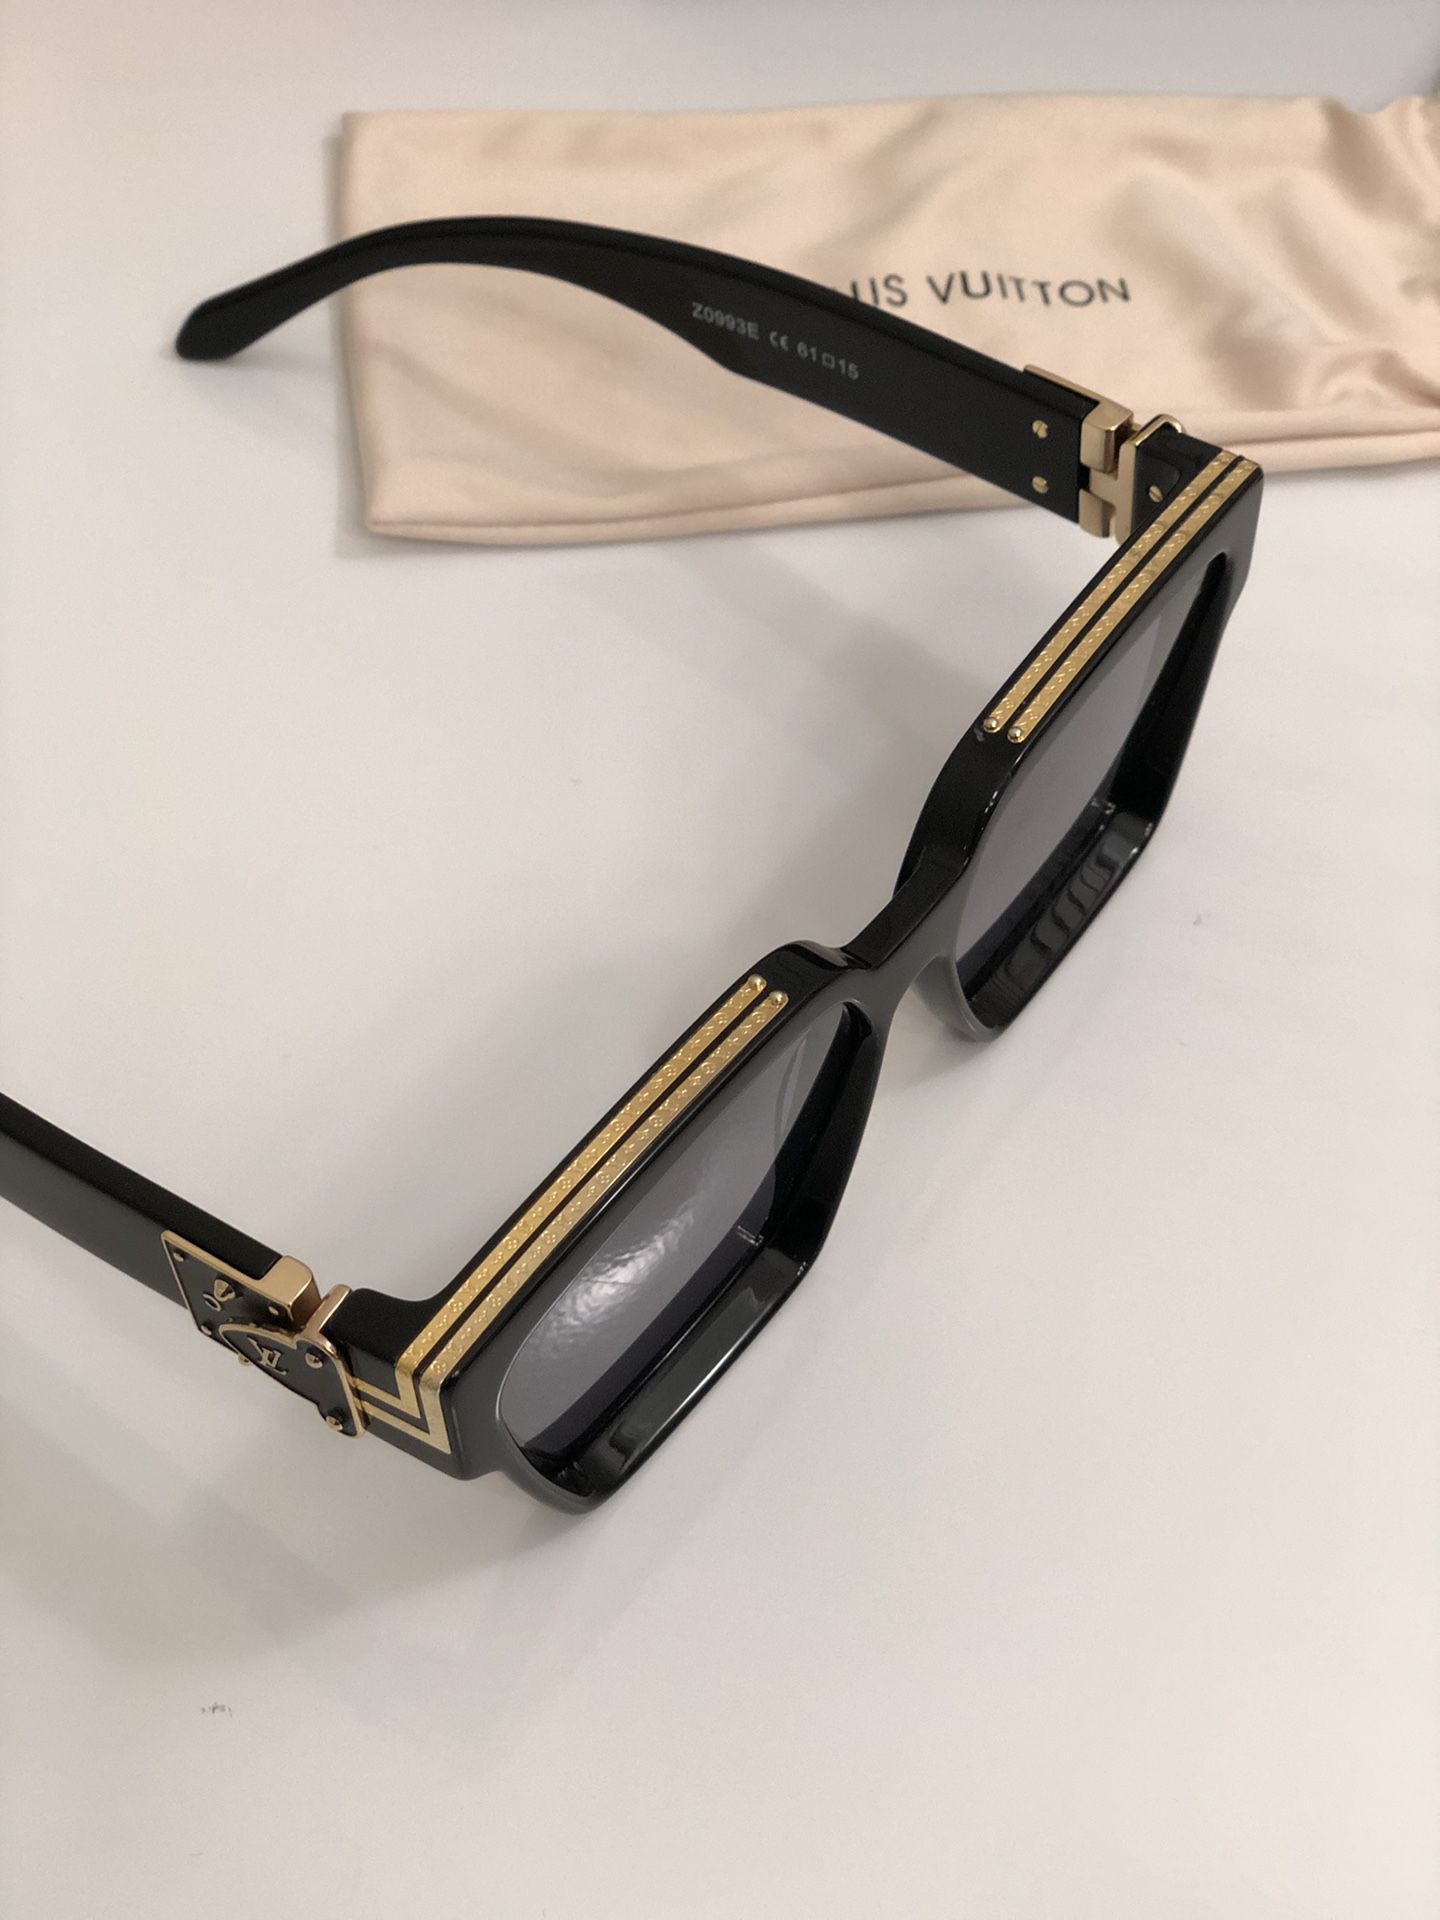 LV Millionaire Glasses for Sale in Orlando, FL - OfferUp